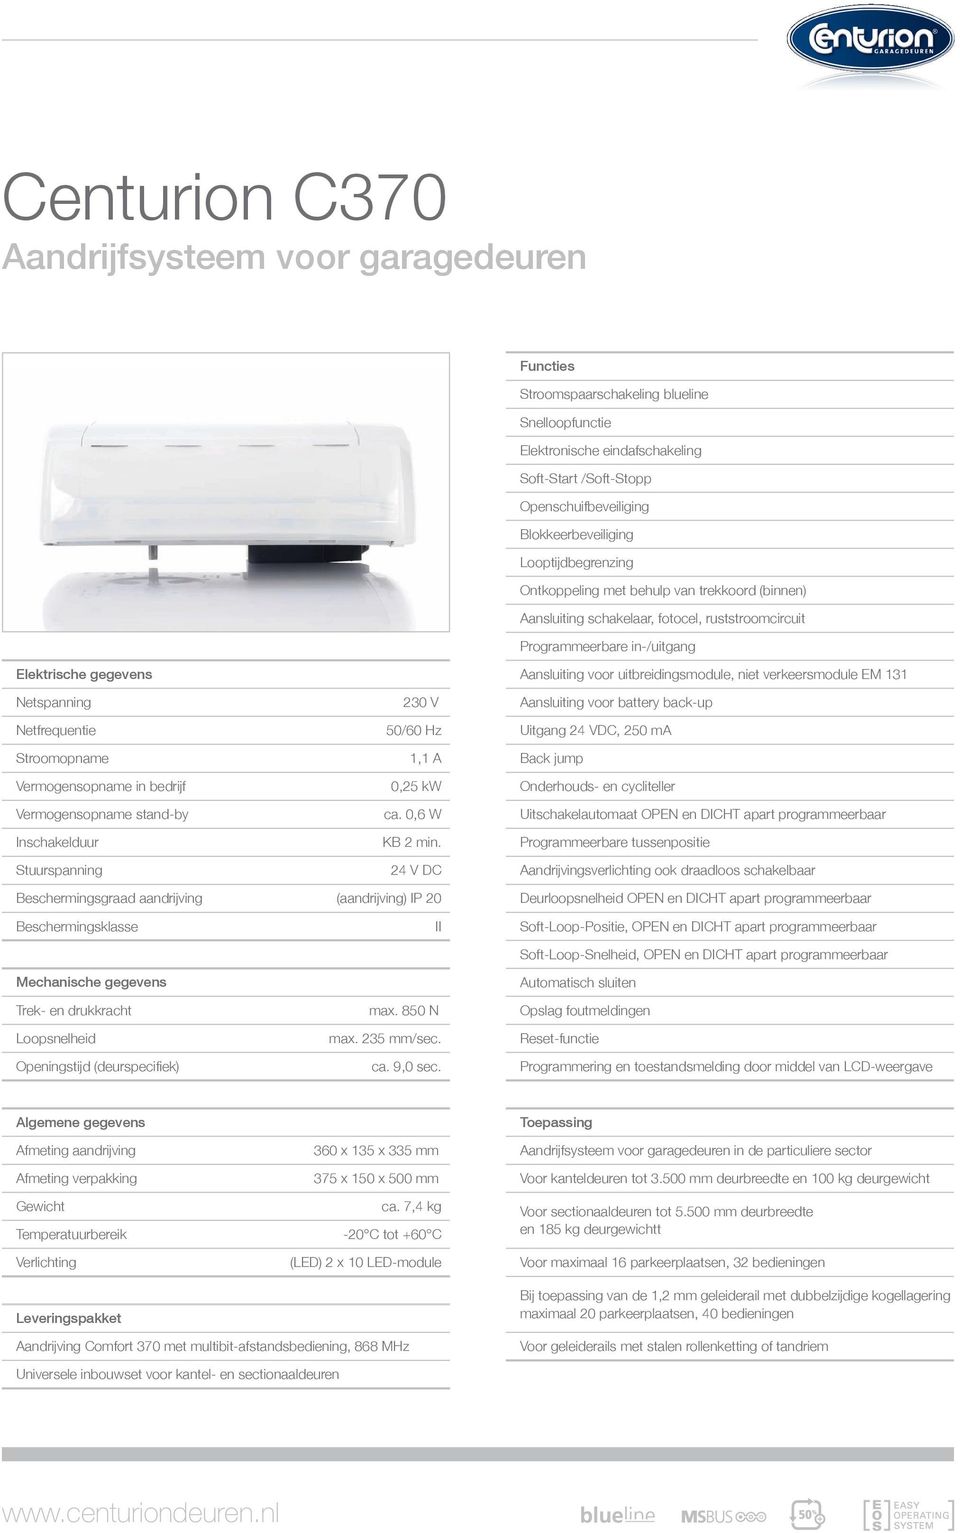 Netfrequentie Stroomopname Vermogensopname in bedrijf Vermogensopname stand-by Inschakelduur Stuurspanning 230 V 50/60 Hz 1,1 A 0,25 kw ca. 0,6 W KB 2 min.